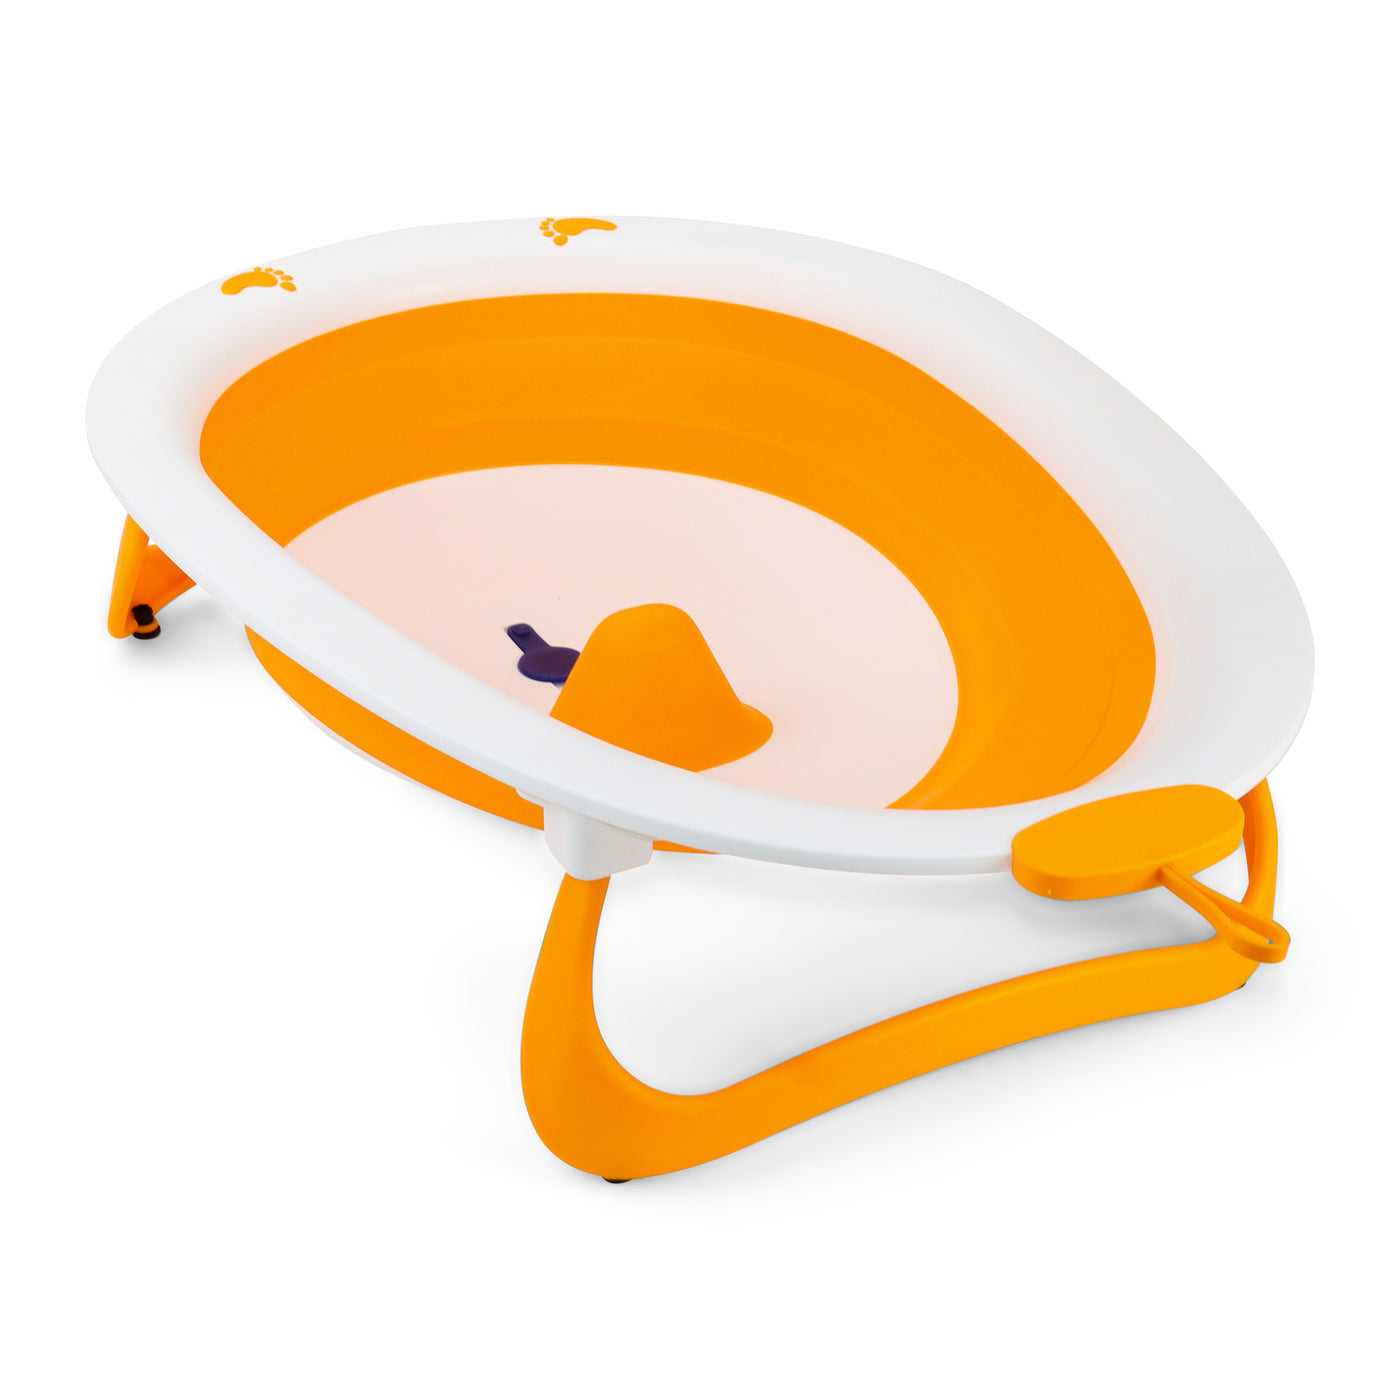 Babybadje - 2 in 1 Opvouwbaar - Compact - kinderbad - Oranje